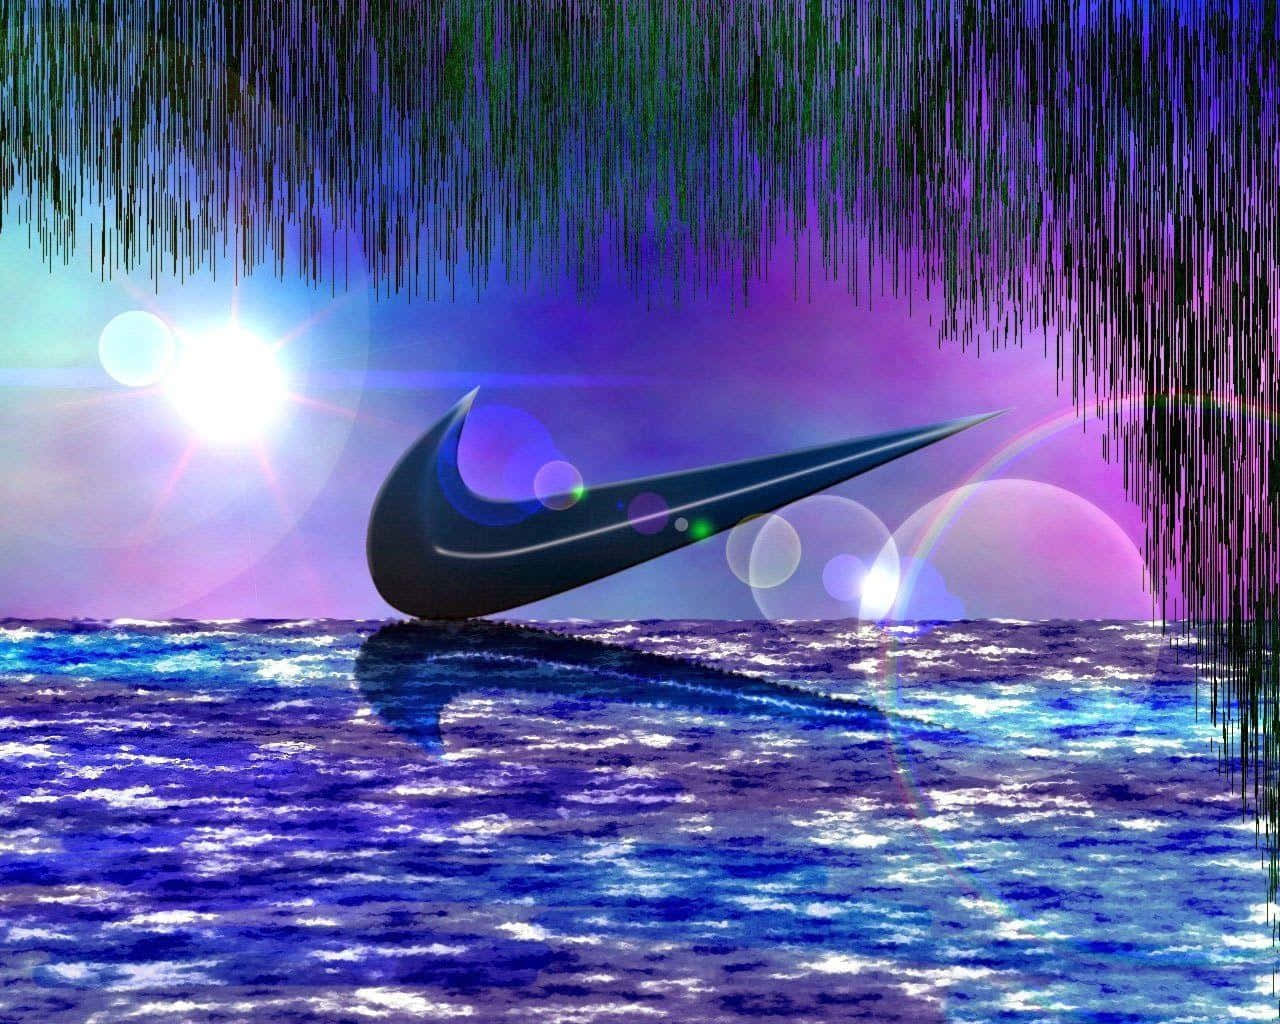 Nike Swoosh In The Water By Sarah Mcdonald